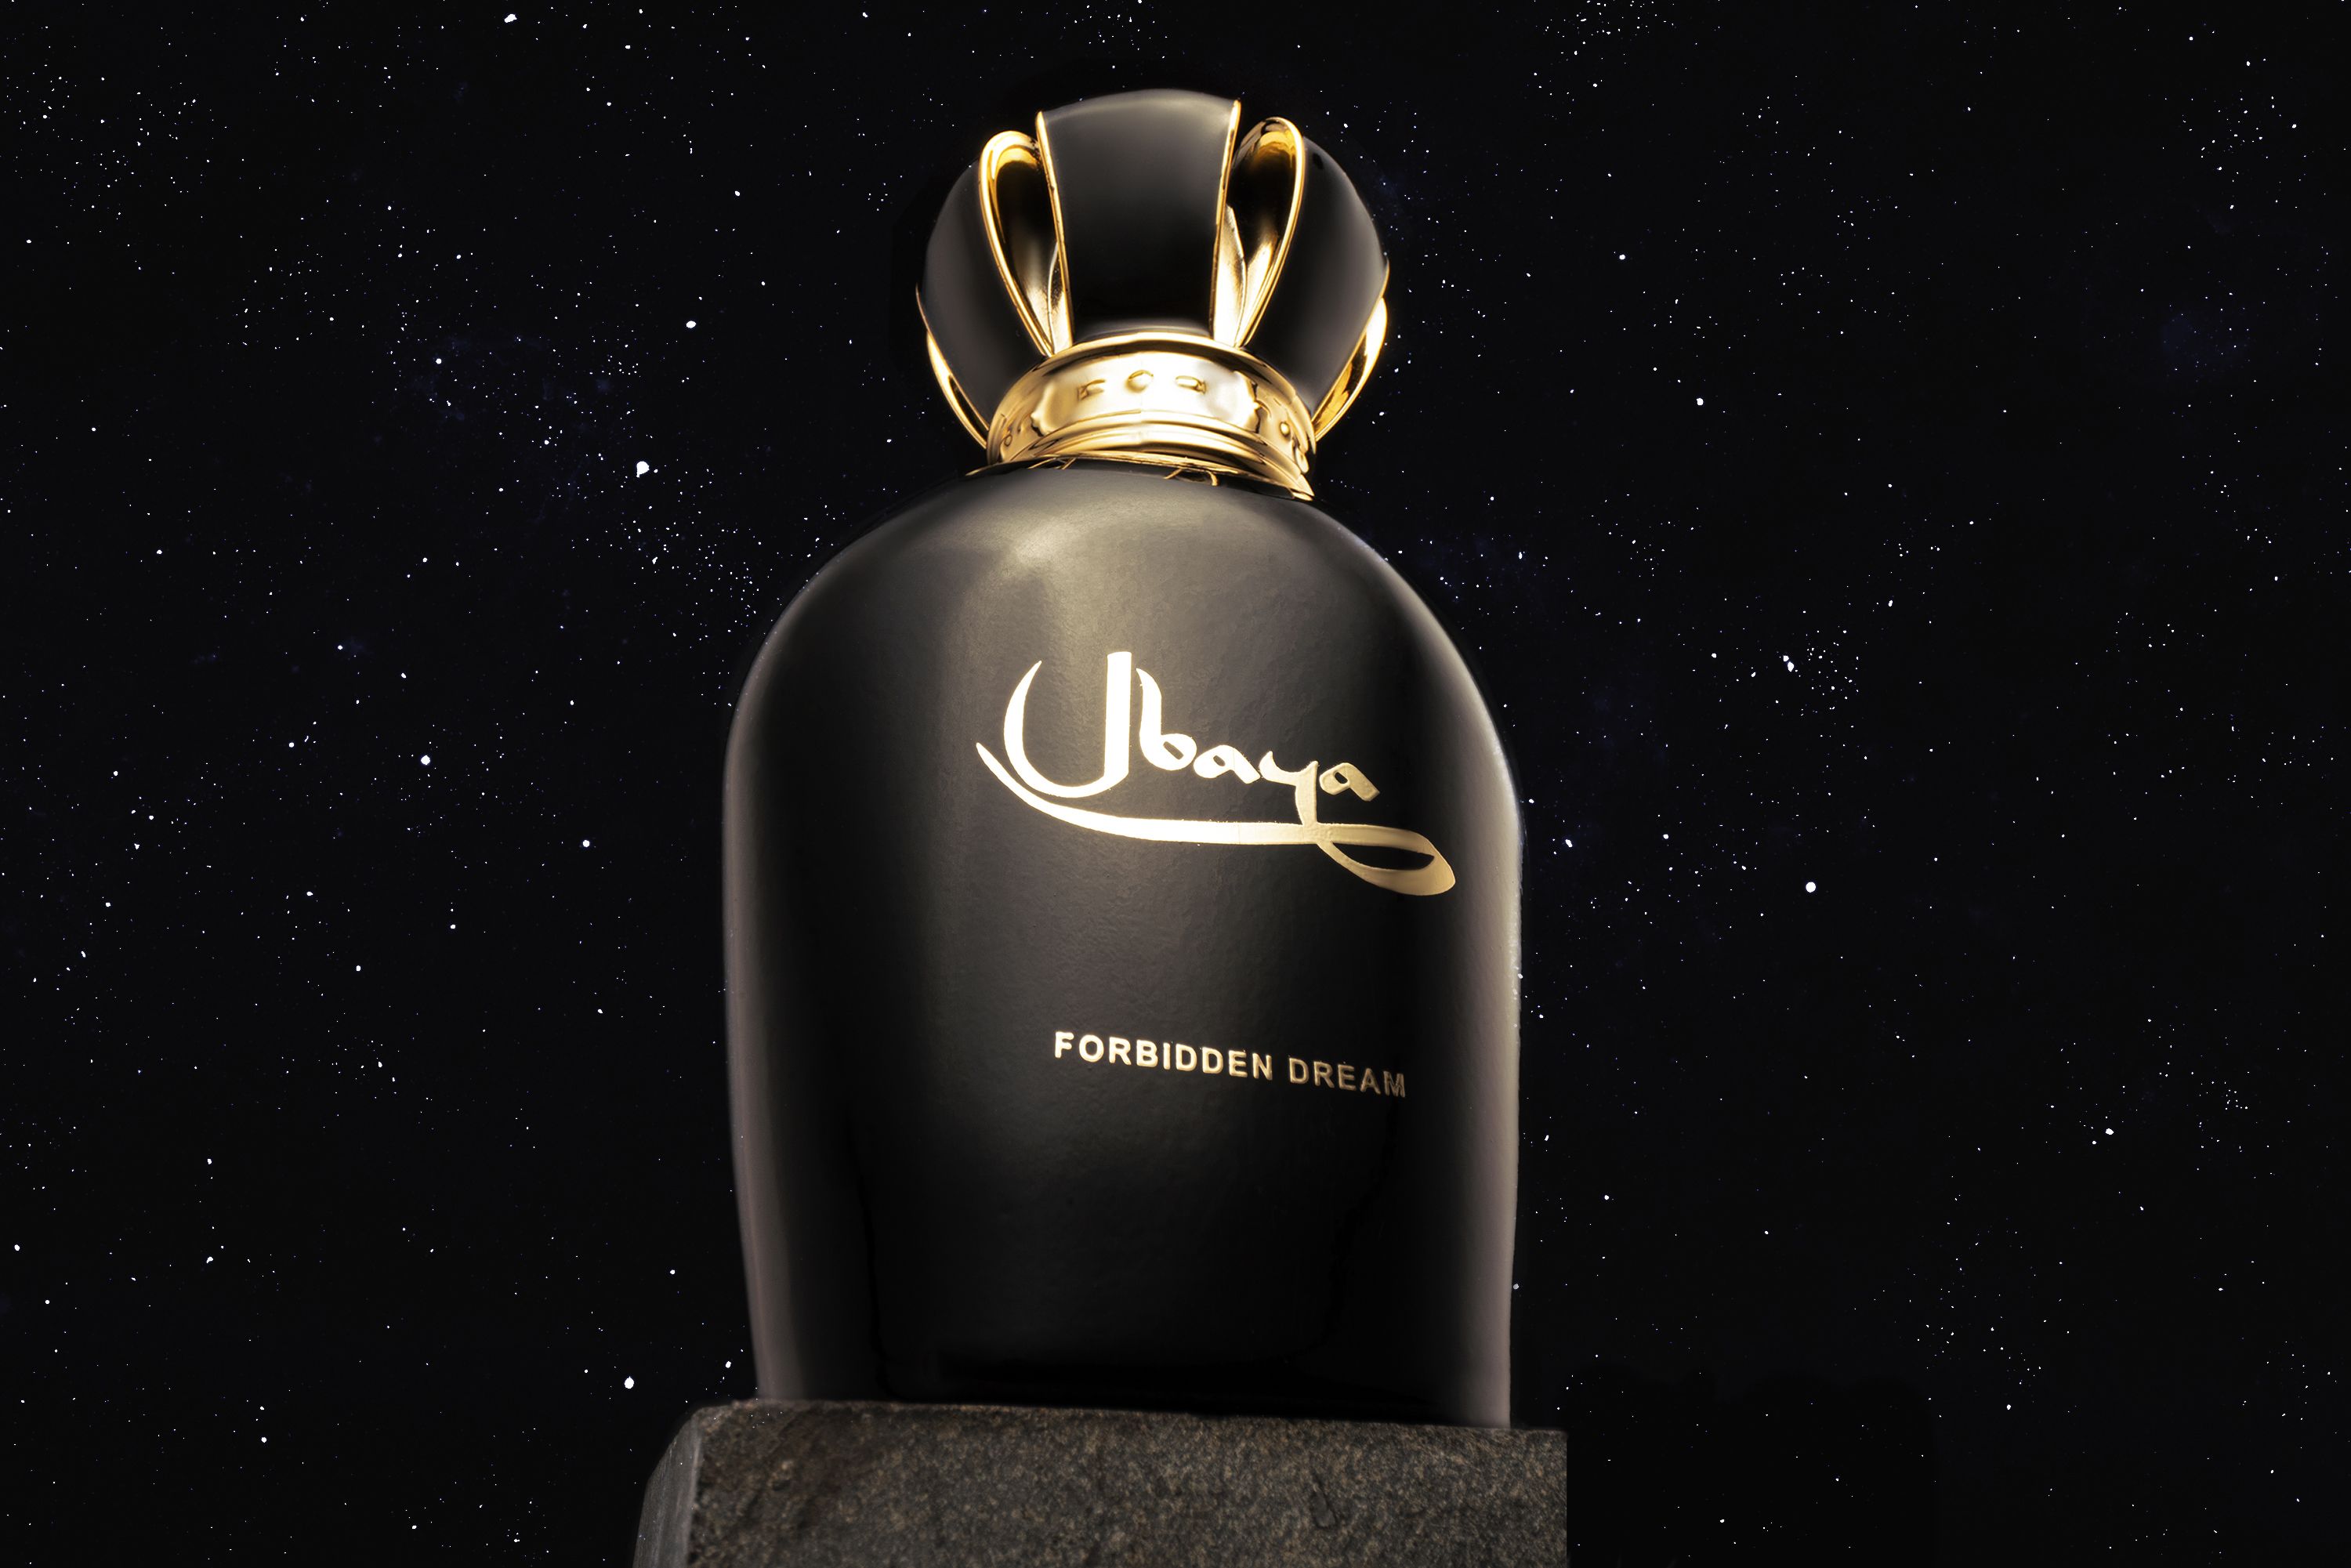 Forbidden Dream Ubaya perfume - a fragrance for women 2021